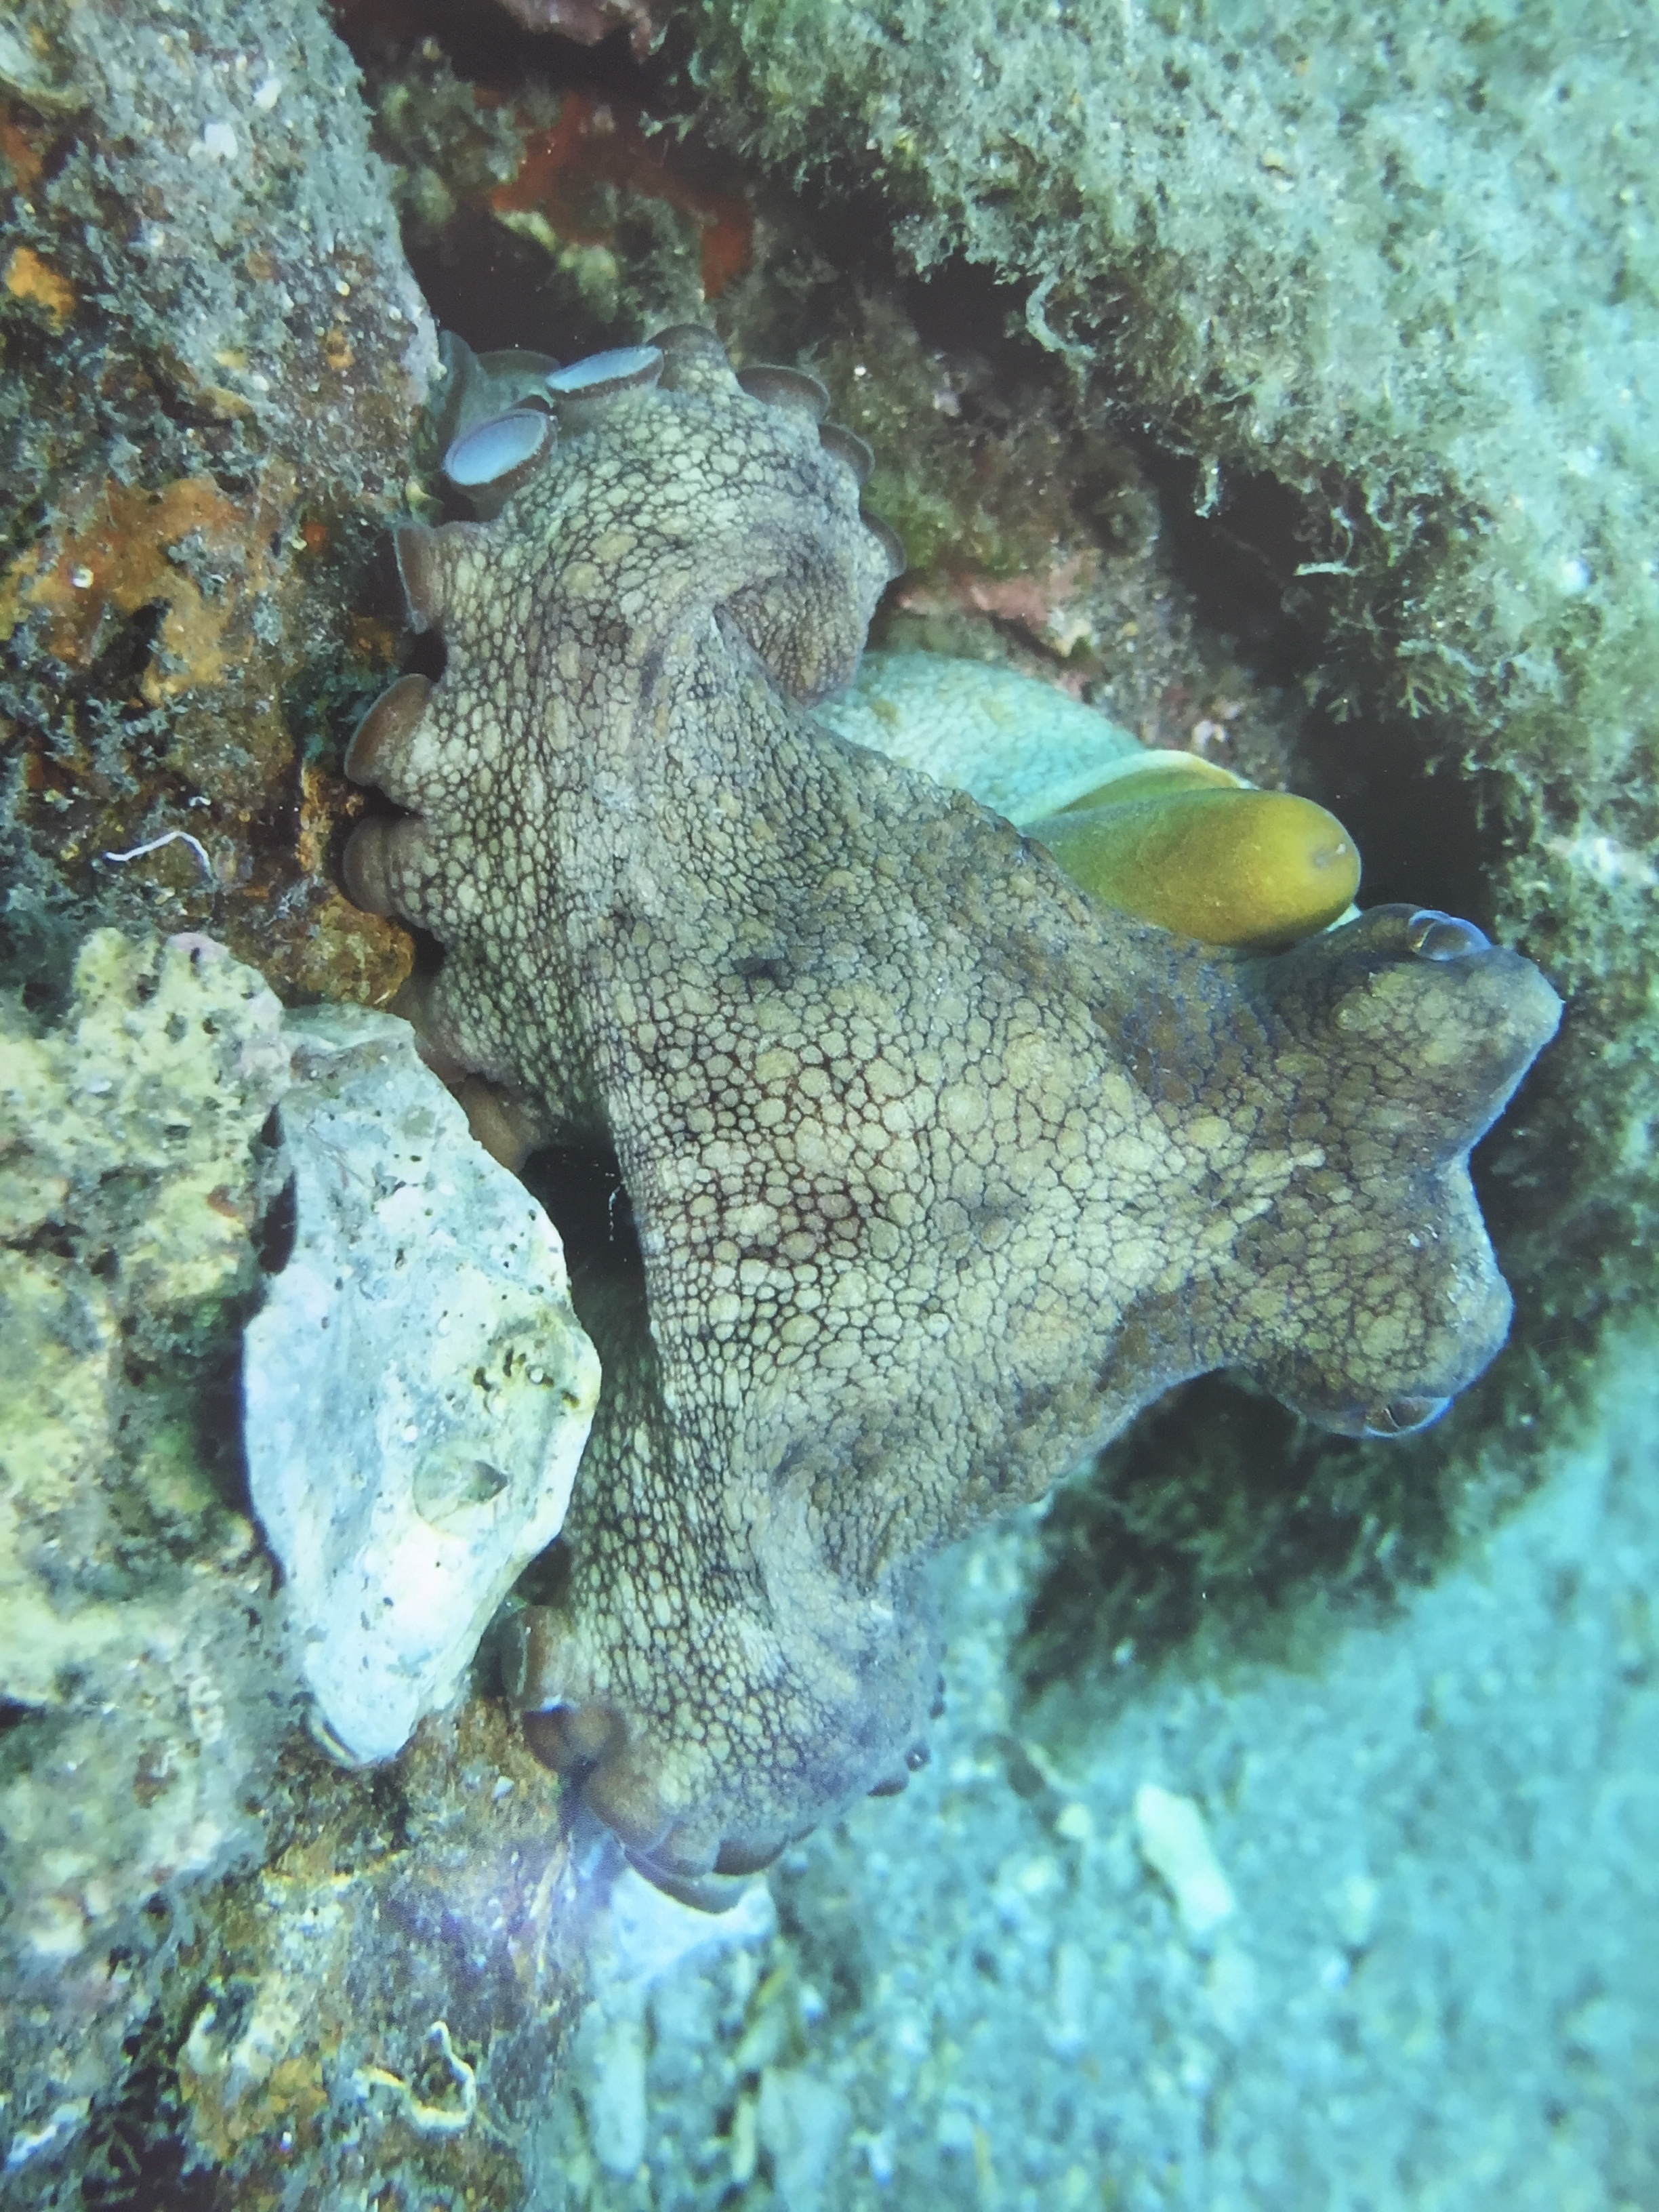 Lawrence Jacobs calls this photo, taken at Blue Heron Bridge this summer, “Octopus Siesta.”